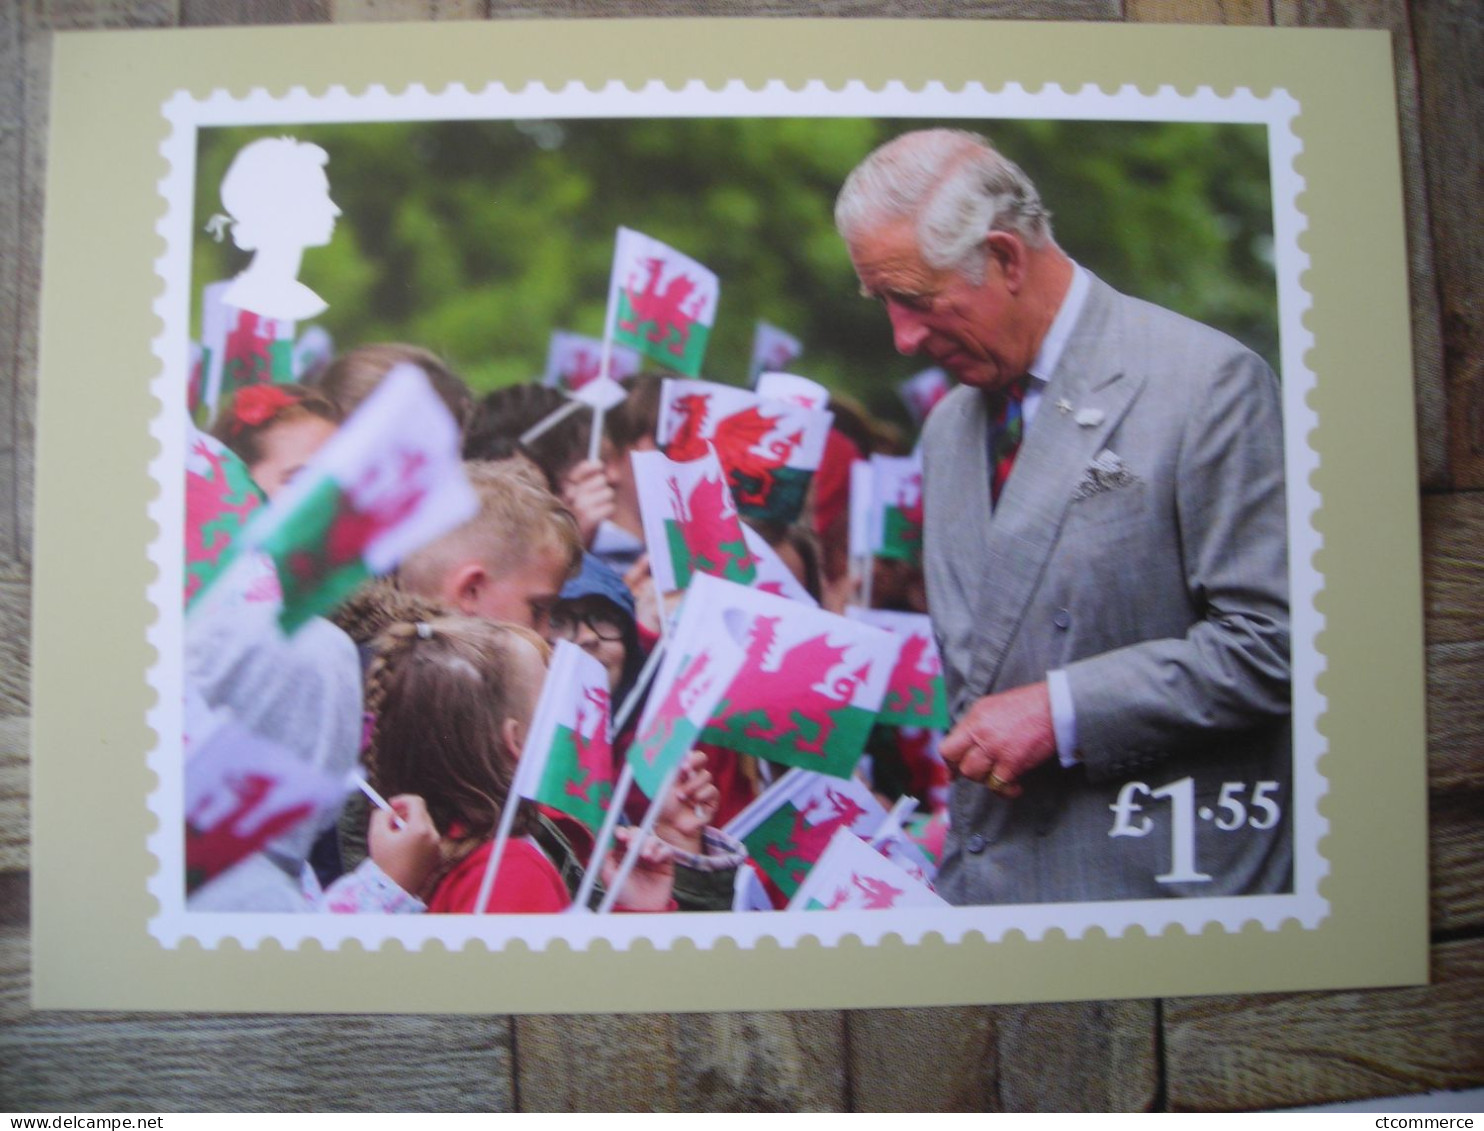 6 cartes postale, PHQ HRH The Prince of Wales 70th birthday, SAR le Prince de Galles 70ème anniversaire,  6 postcards